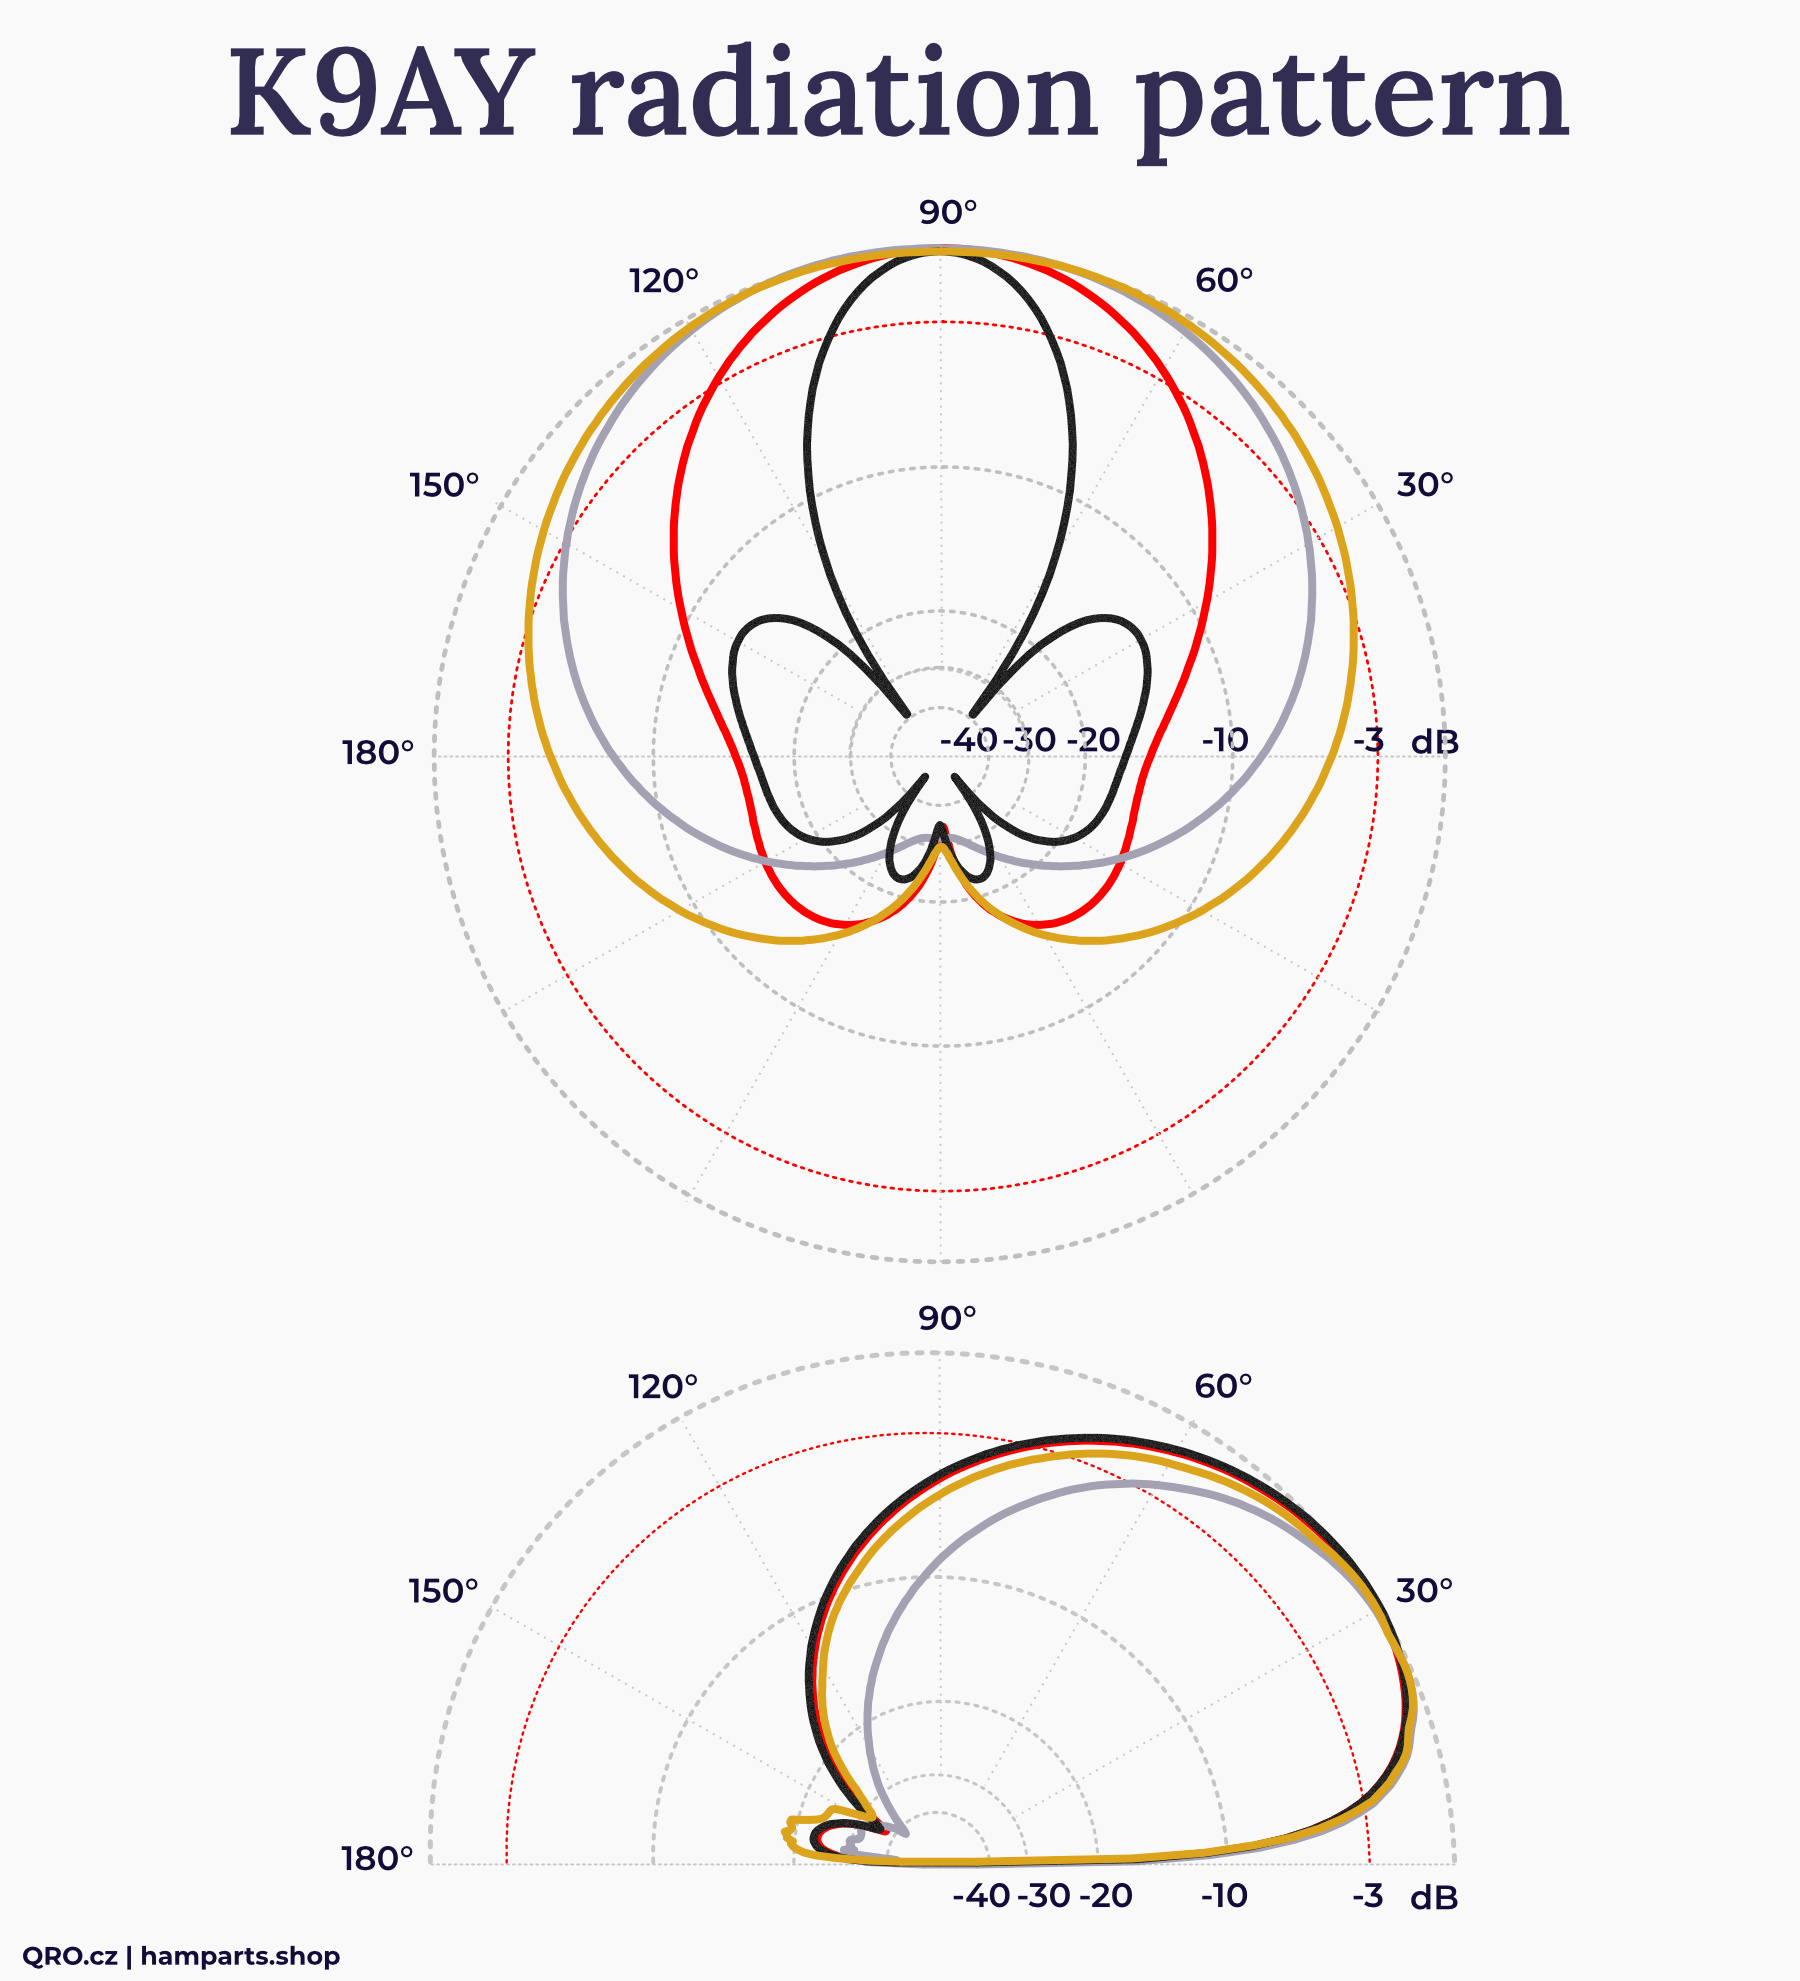 k9ay antenna pattern end fire broadside comparison by qro.cz hamparts.shop